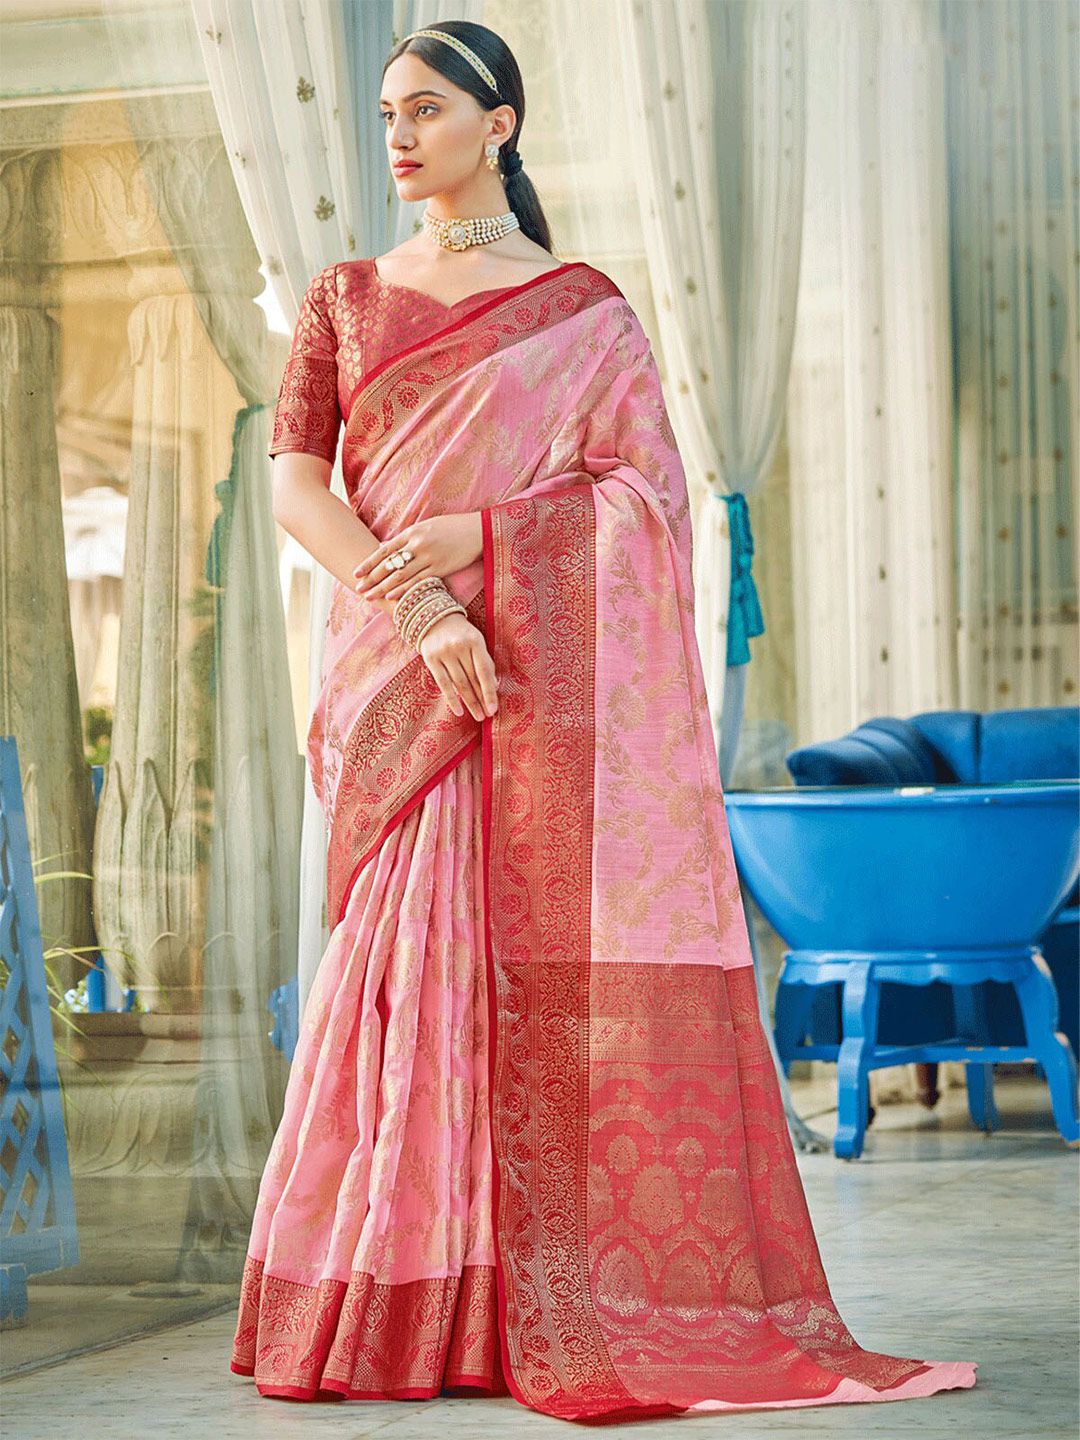 ODETTE Pink & Red Floral Zari Saree Price in India